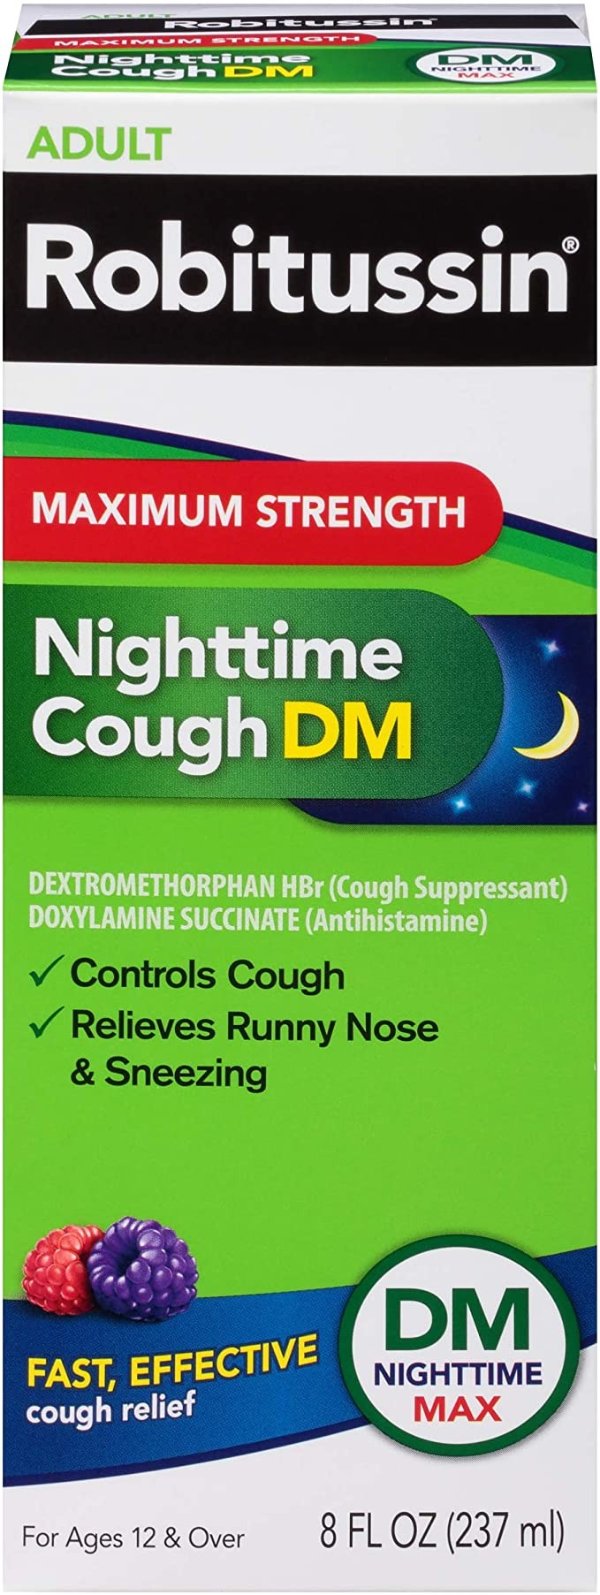 Maximum Strength Nighttime Cough DM, Cough Medicine for Adults, Berry Flavor - 8 Fl Oz